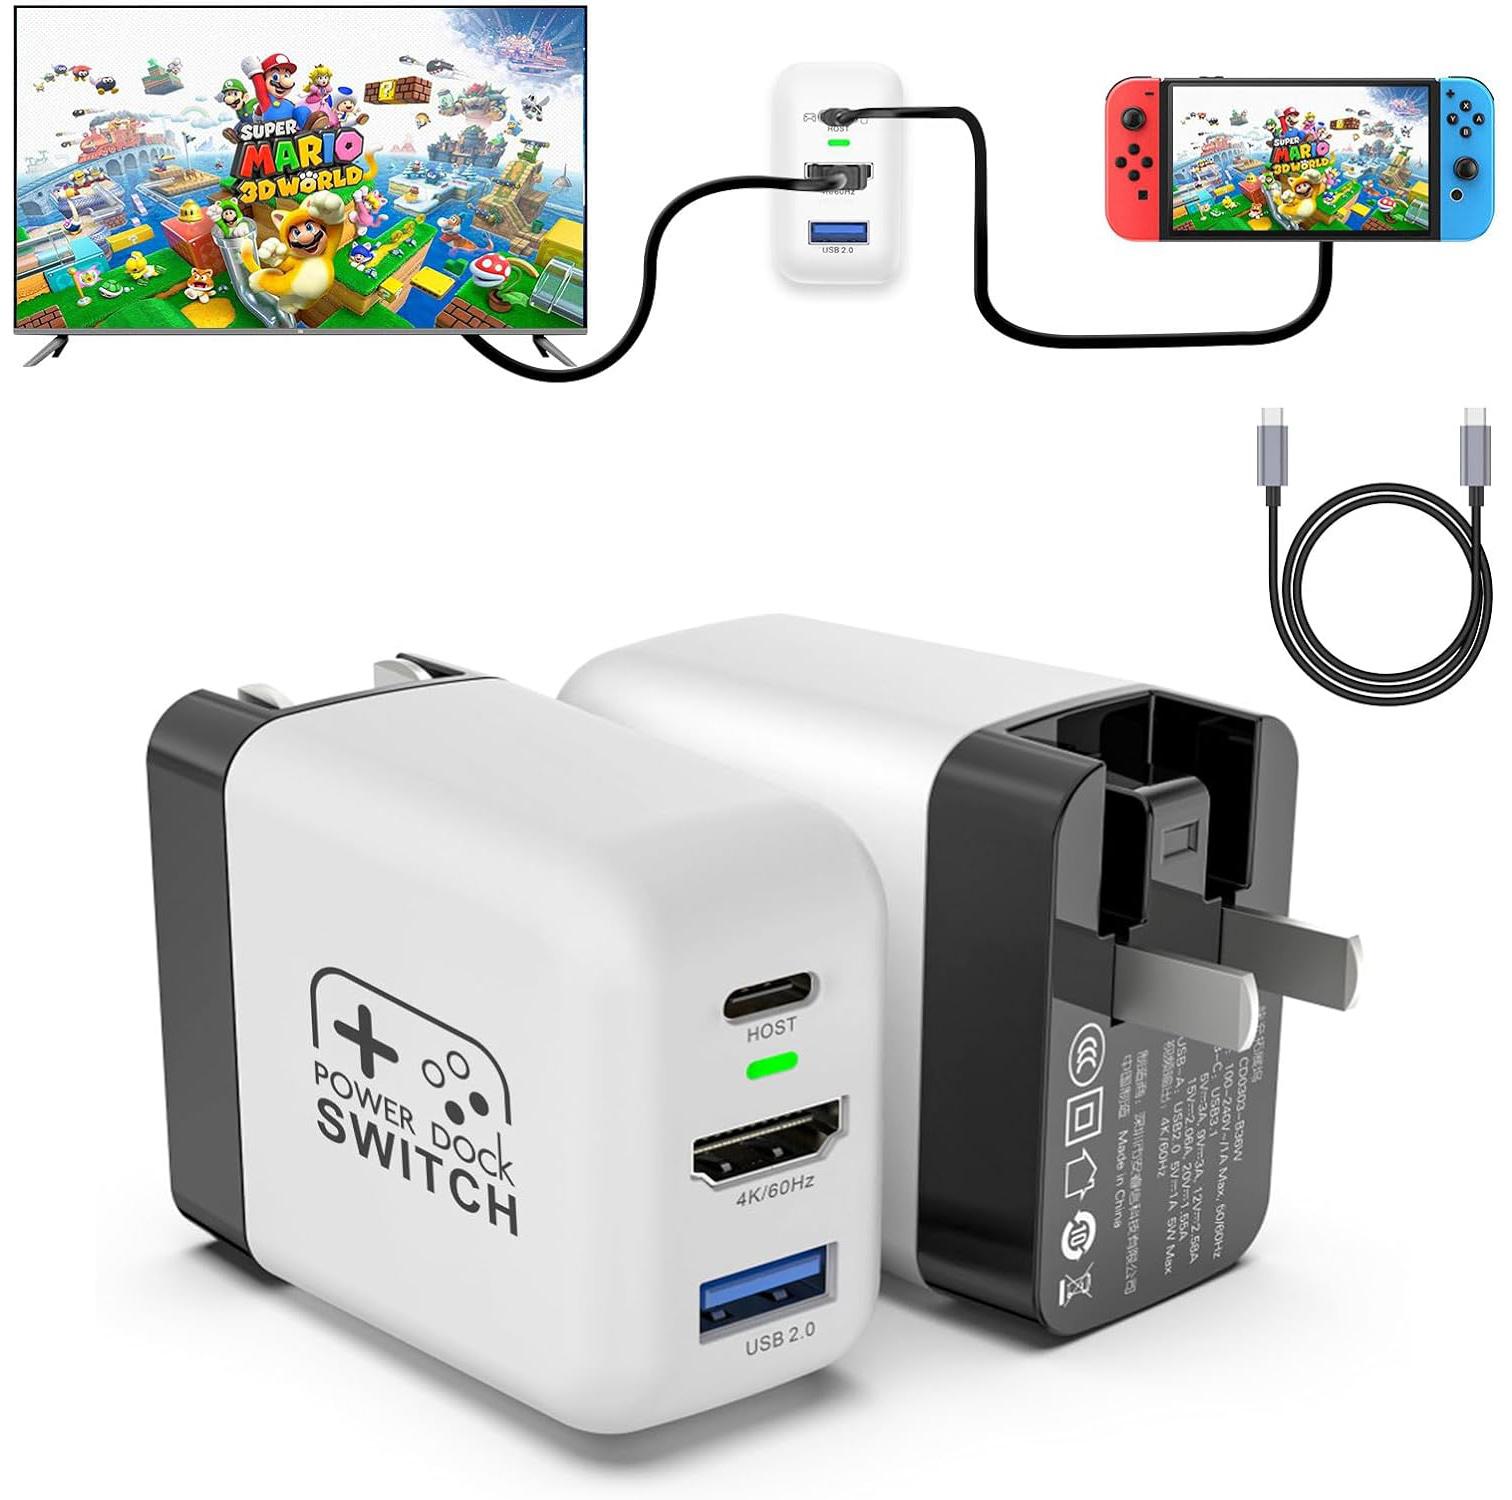 Mirabox 30W Portable TV Nintendo Switch Docking Station for $17.99